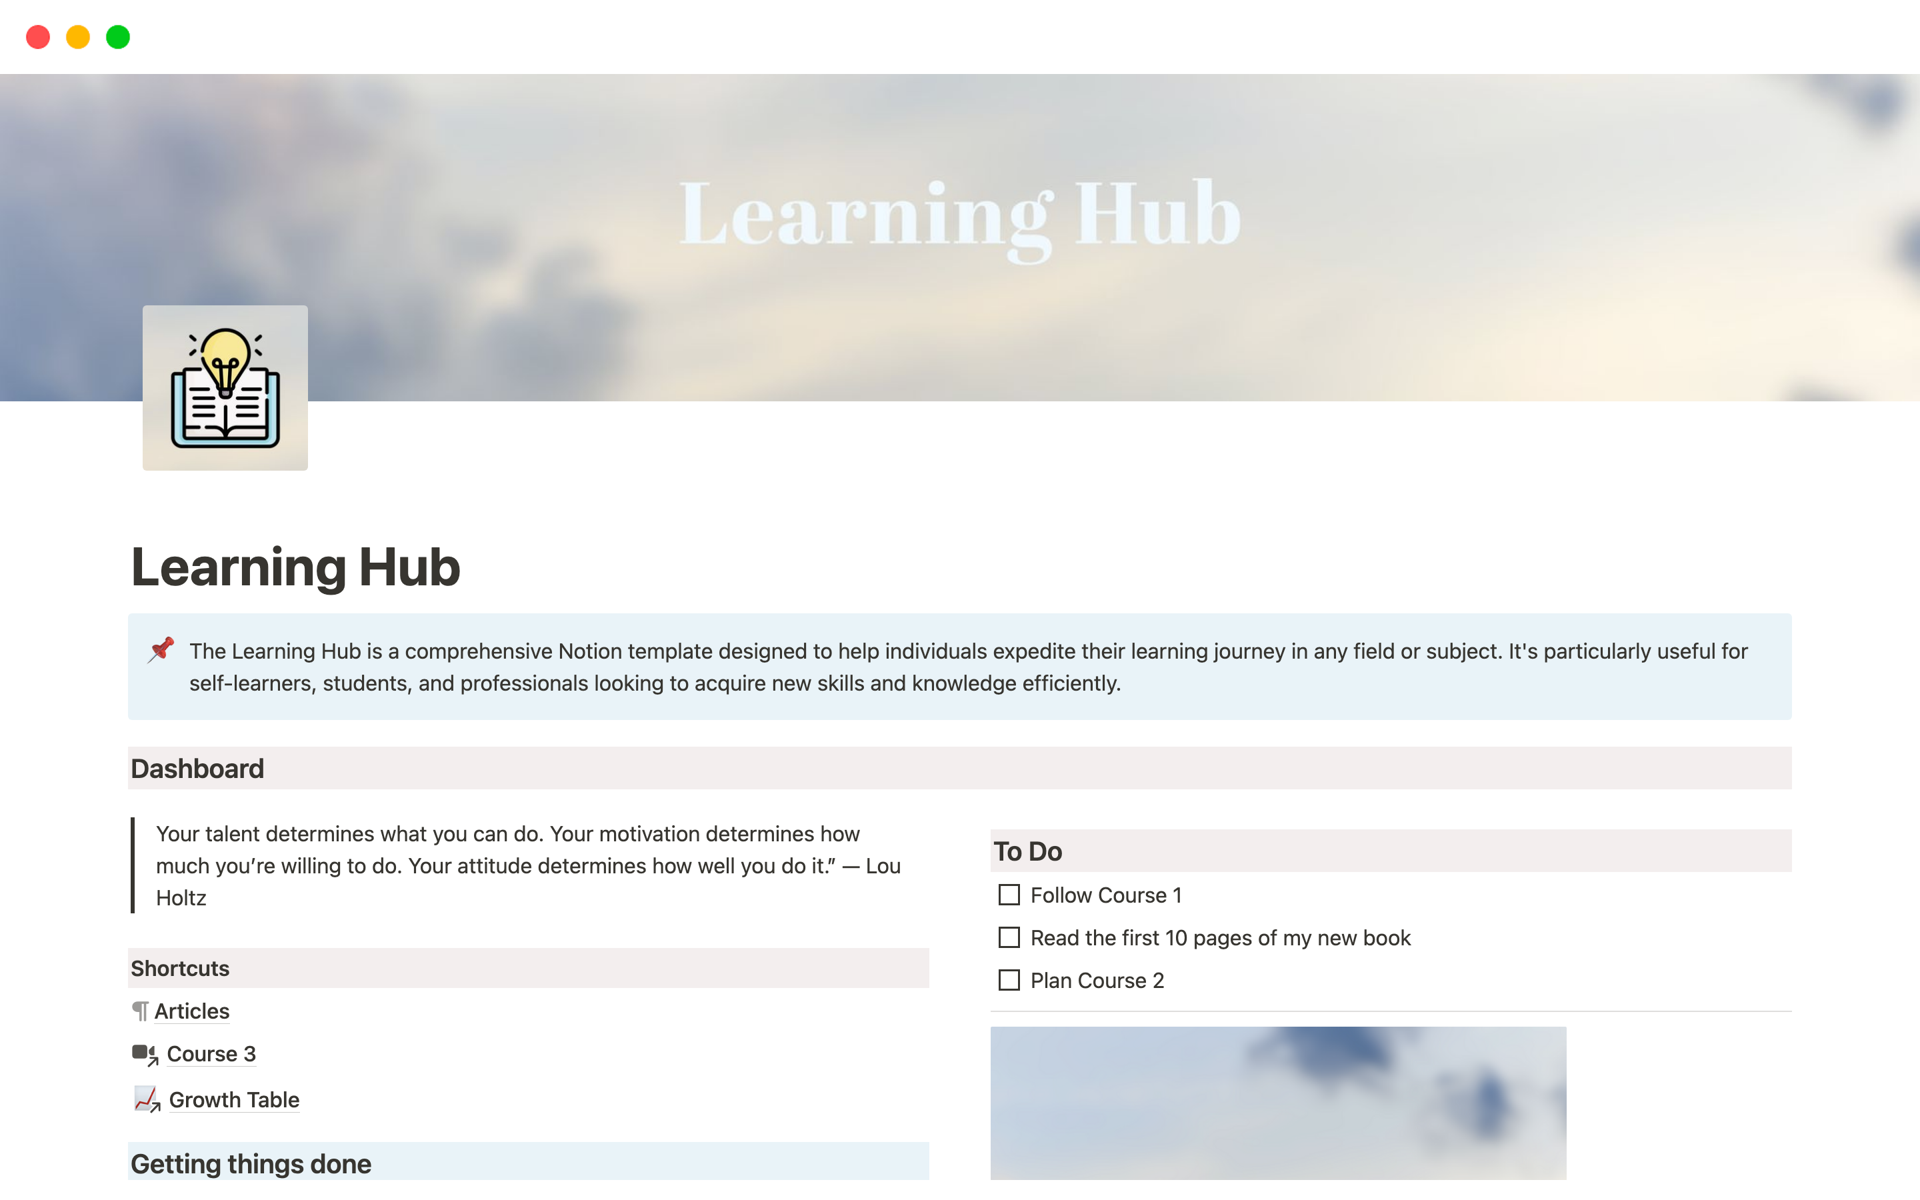 Aperçu du modèle de Learning Hub